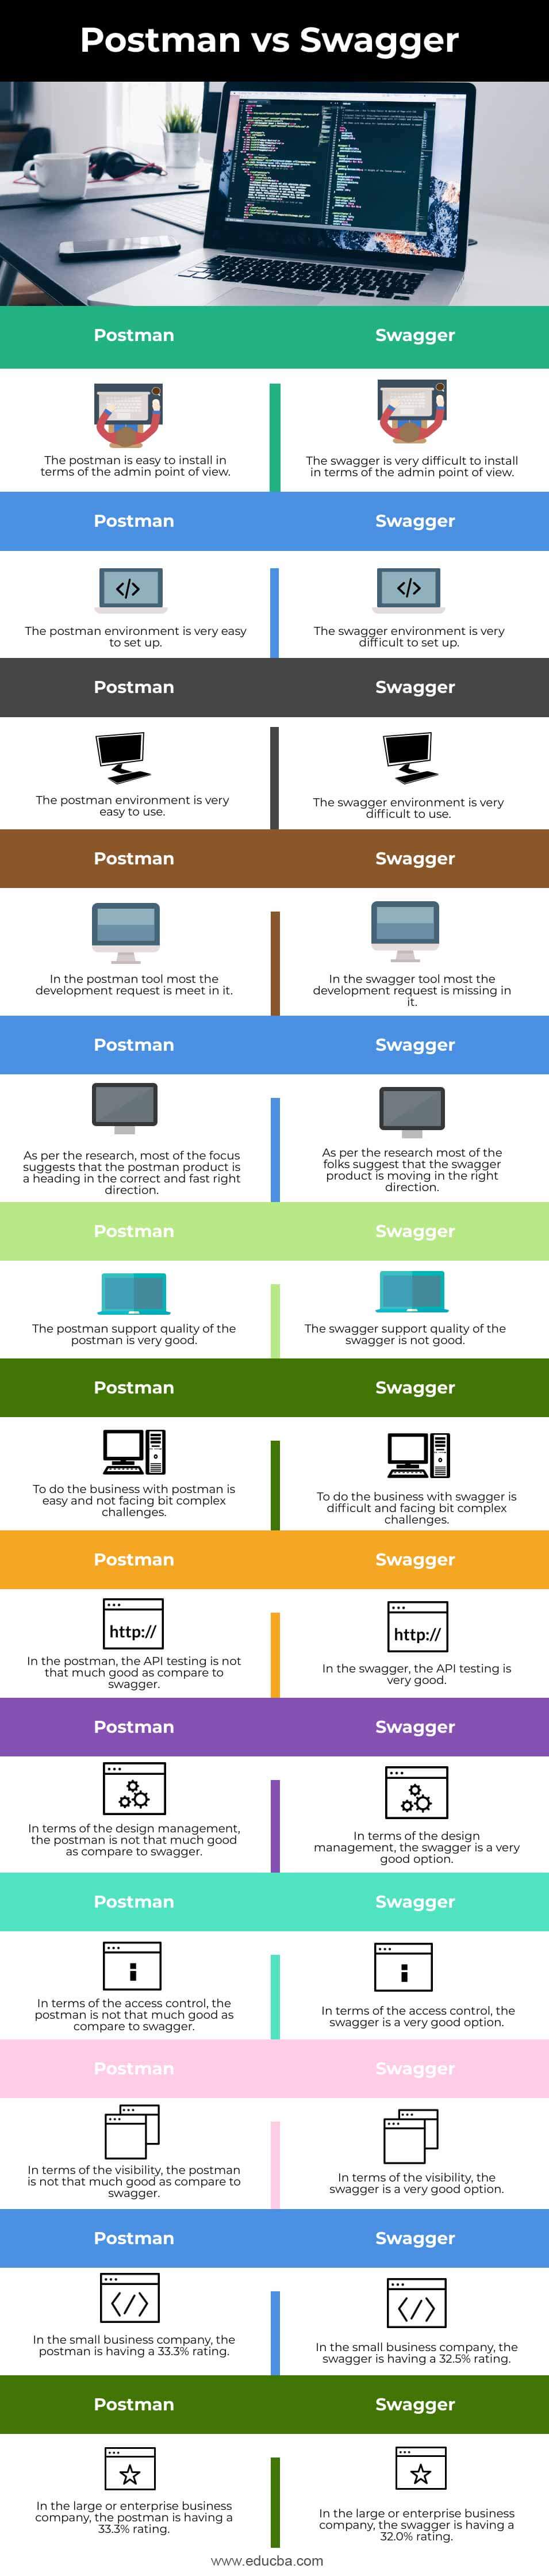 Postman-vs-Swagger-info